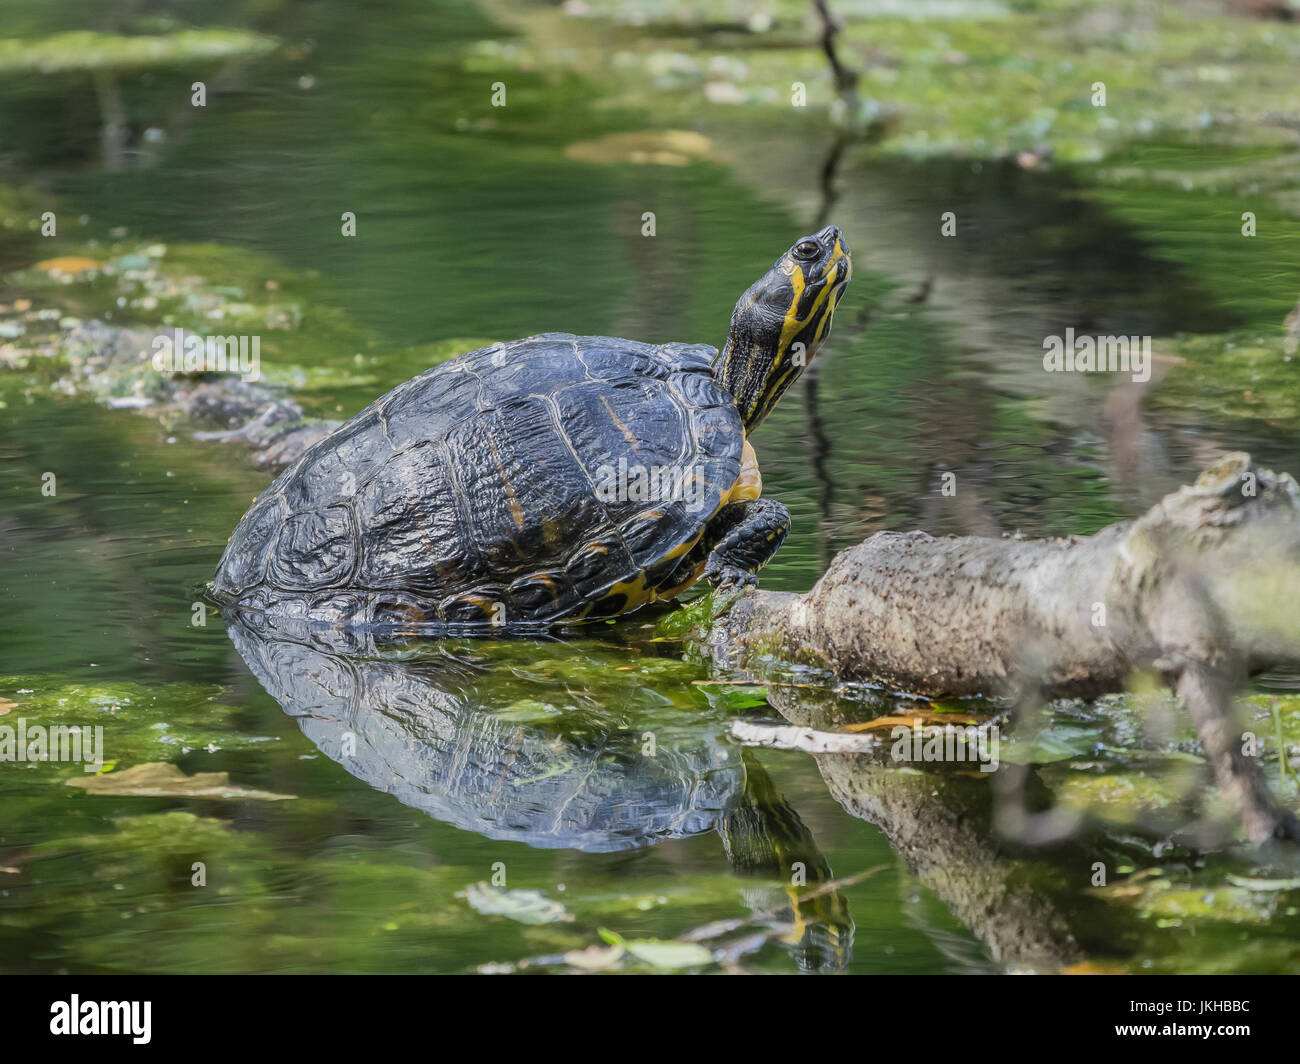 Sunbathing Yellow-bellied slider turtle (Trachemys scripta scripta) in a lake Stock Photo